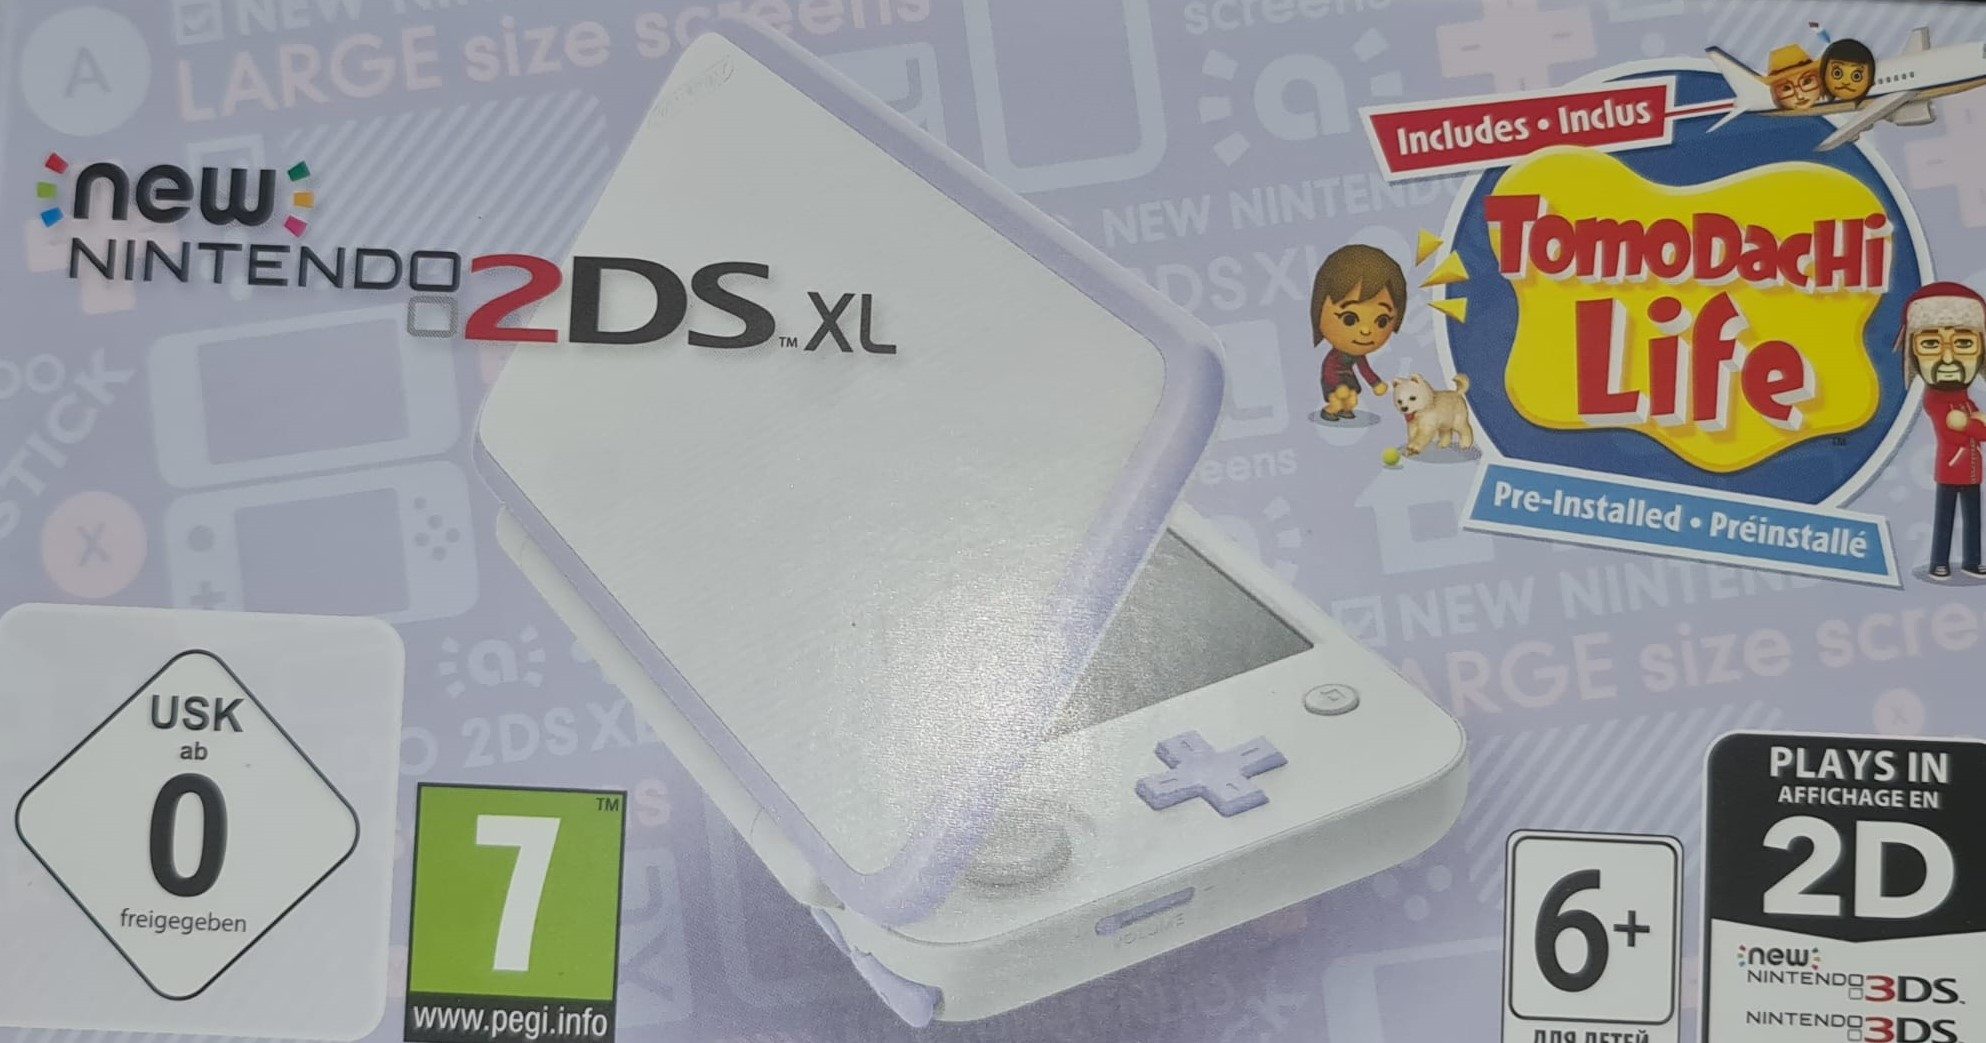 New Nintendo 3 DS XL New 2DS XL weiß Lavendel inkl. Tomodachi Life